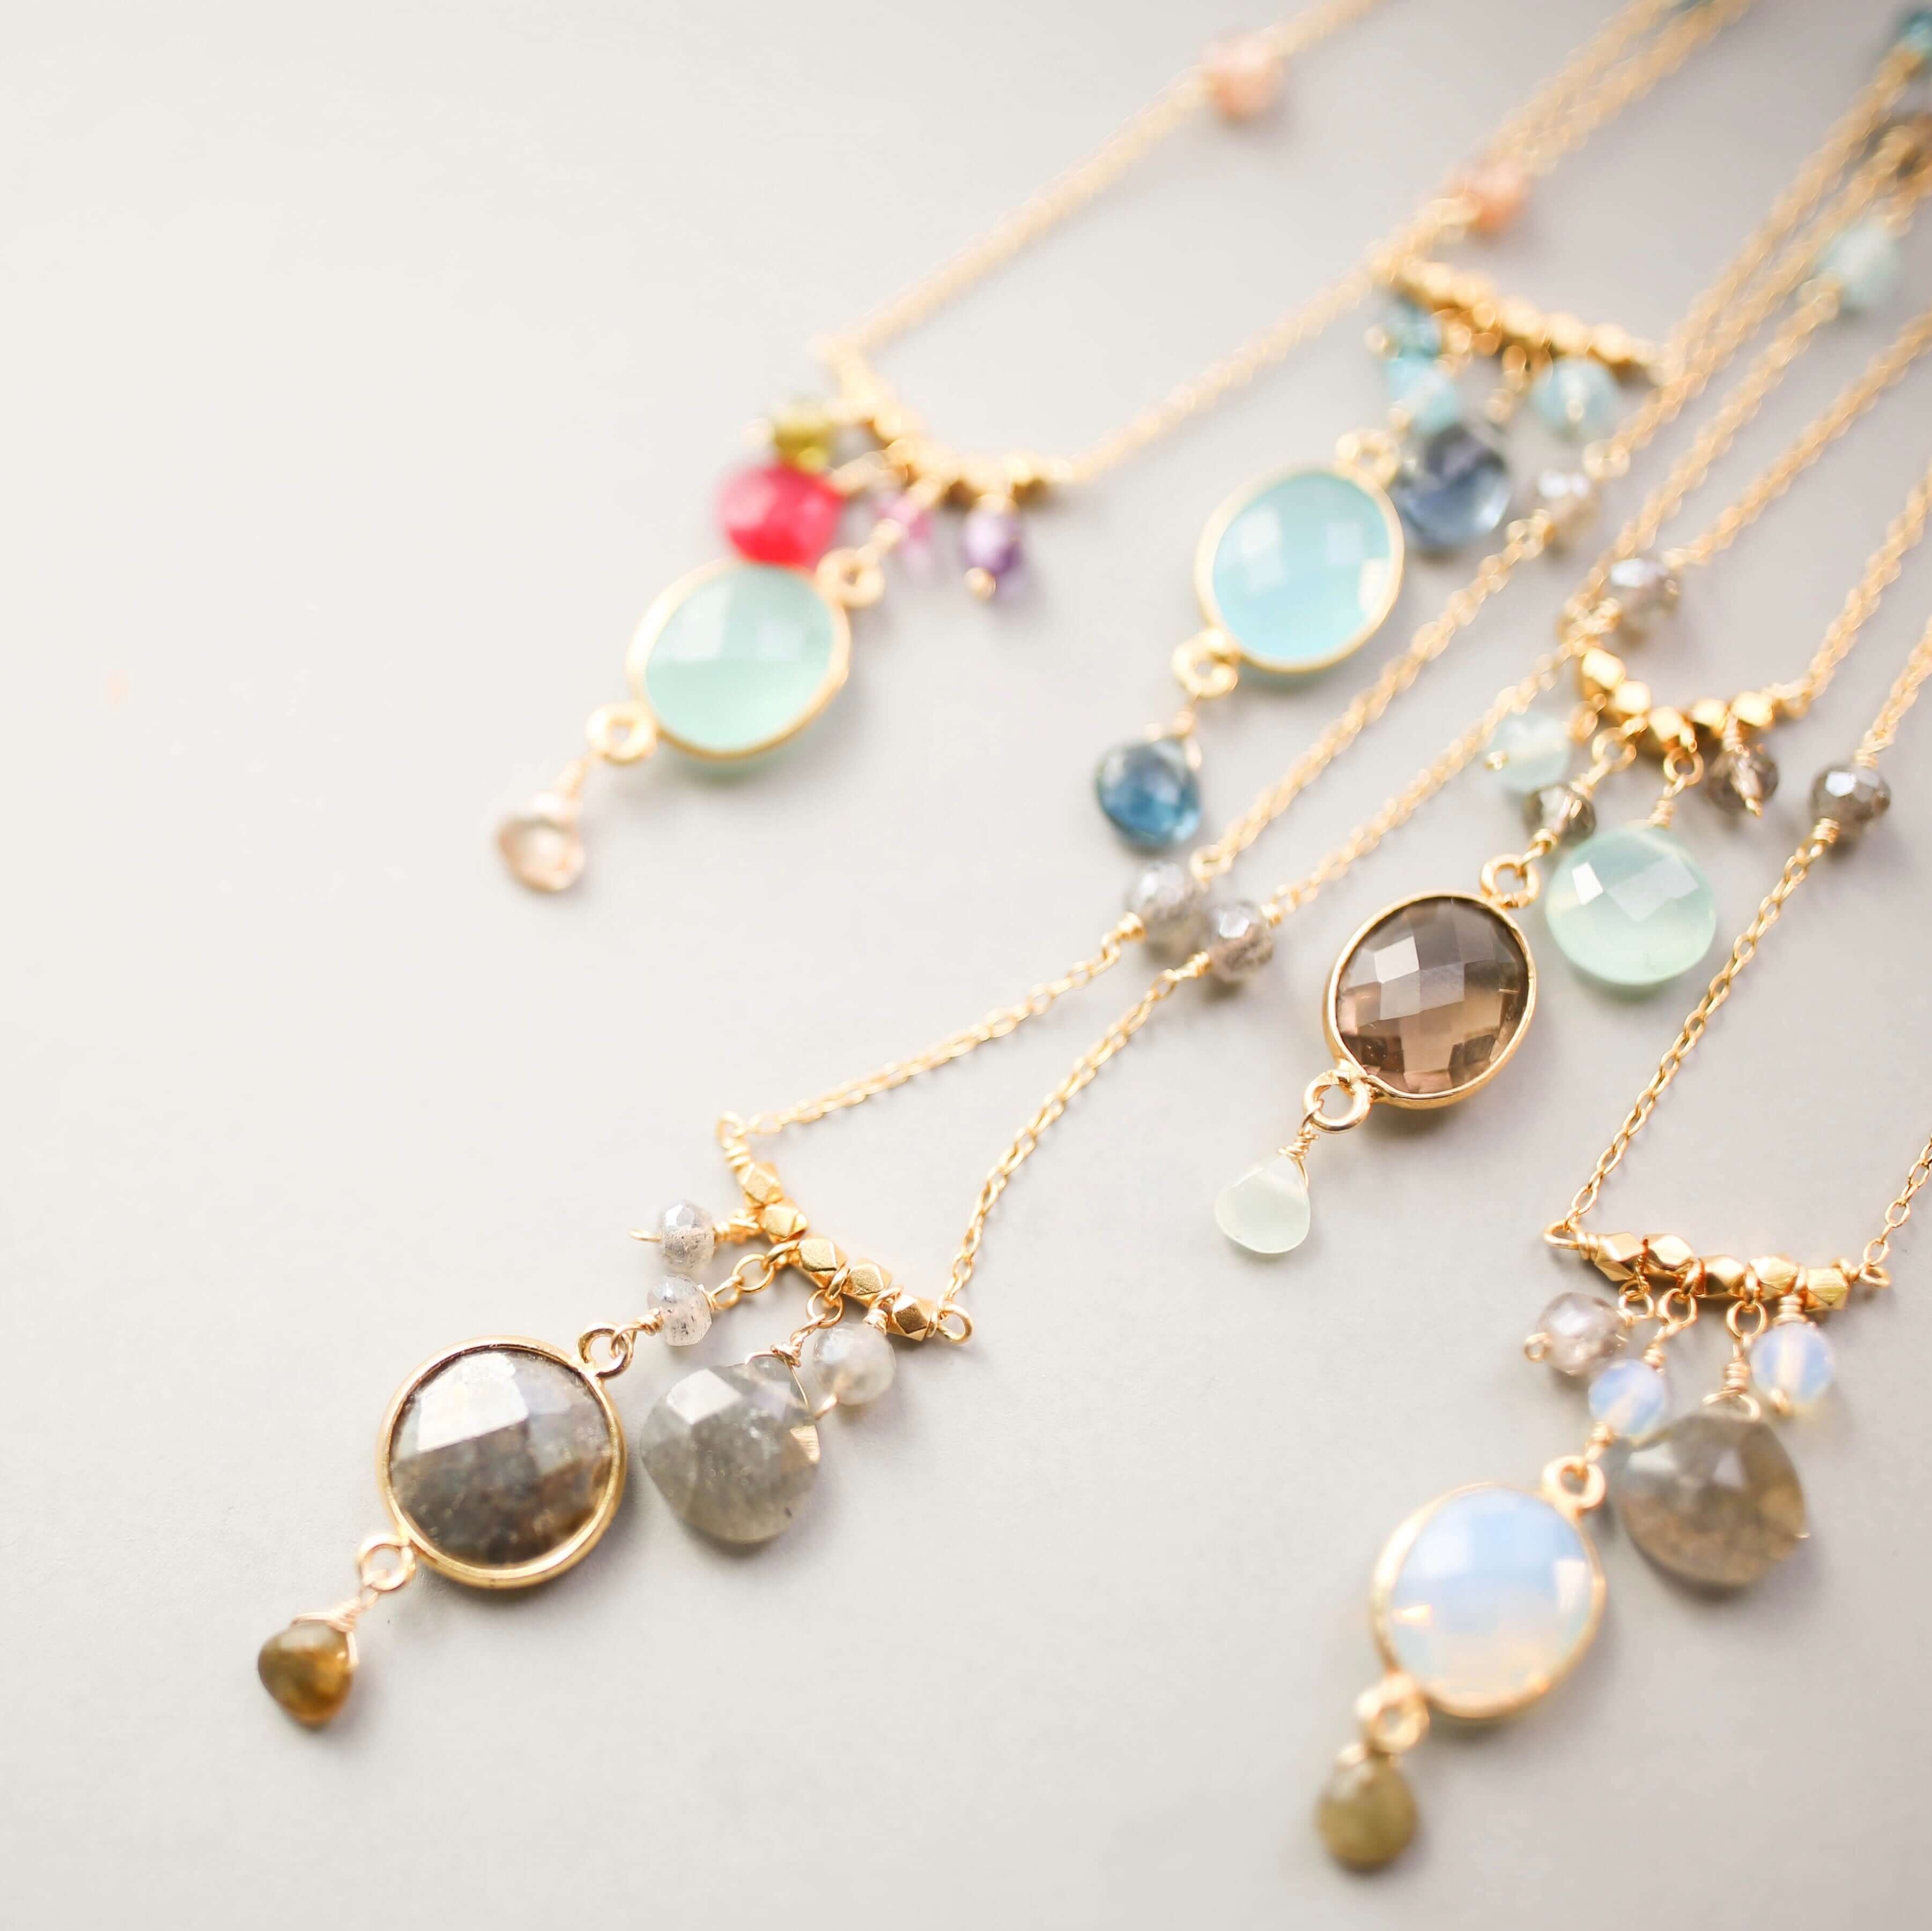 Gold Bezel-set opal quartz gemstone and labradorite accent stones Necklace 